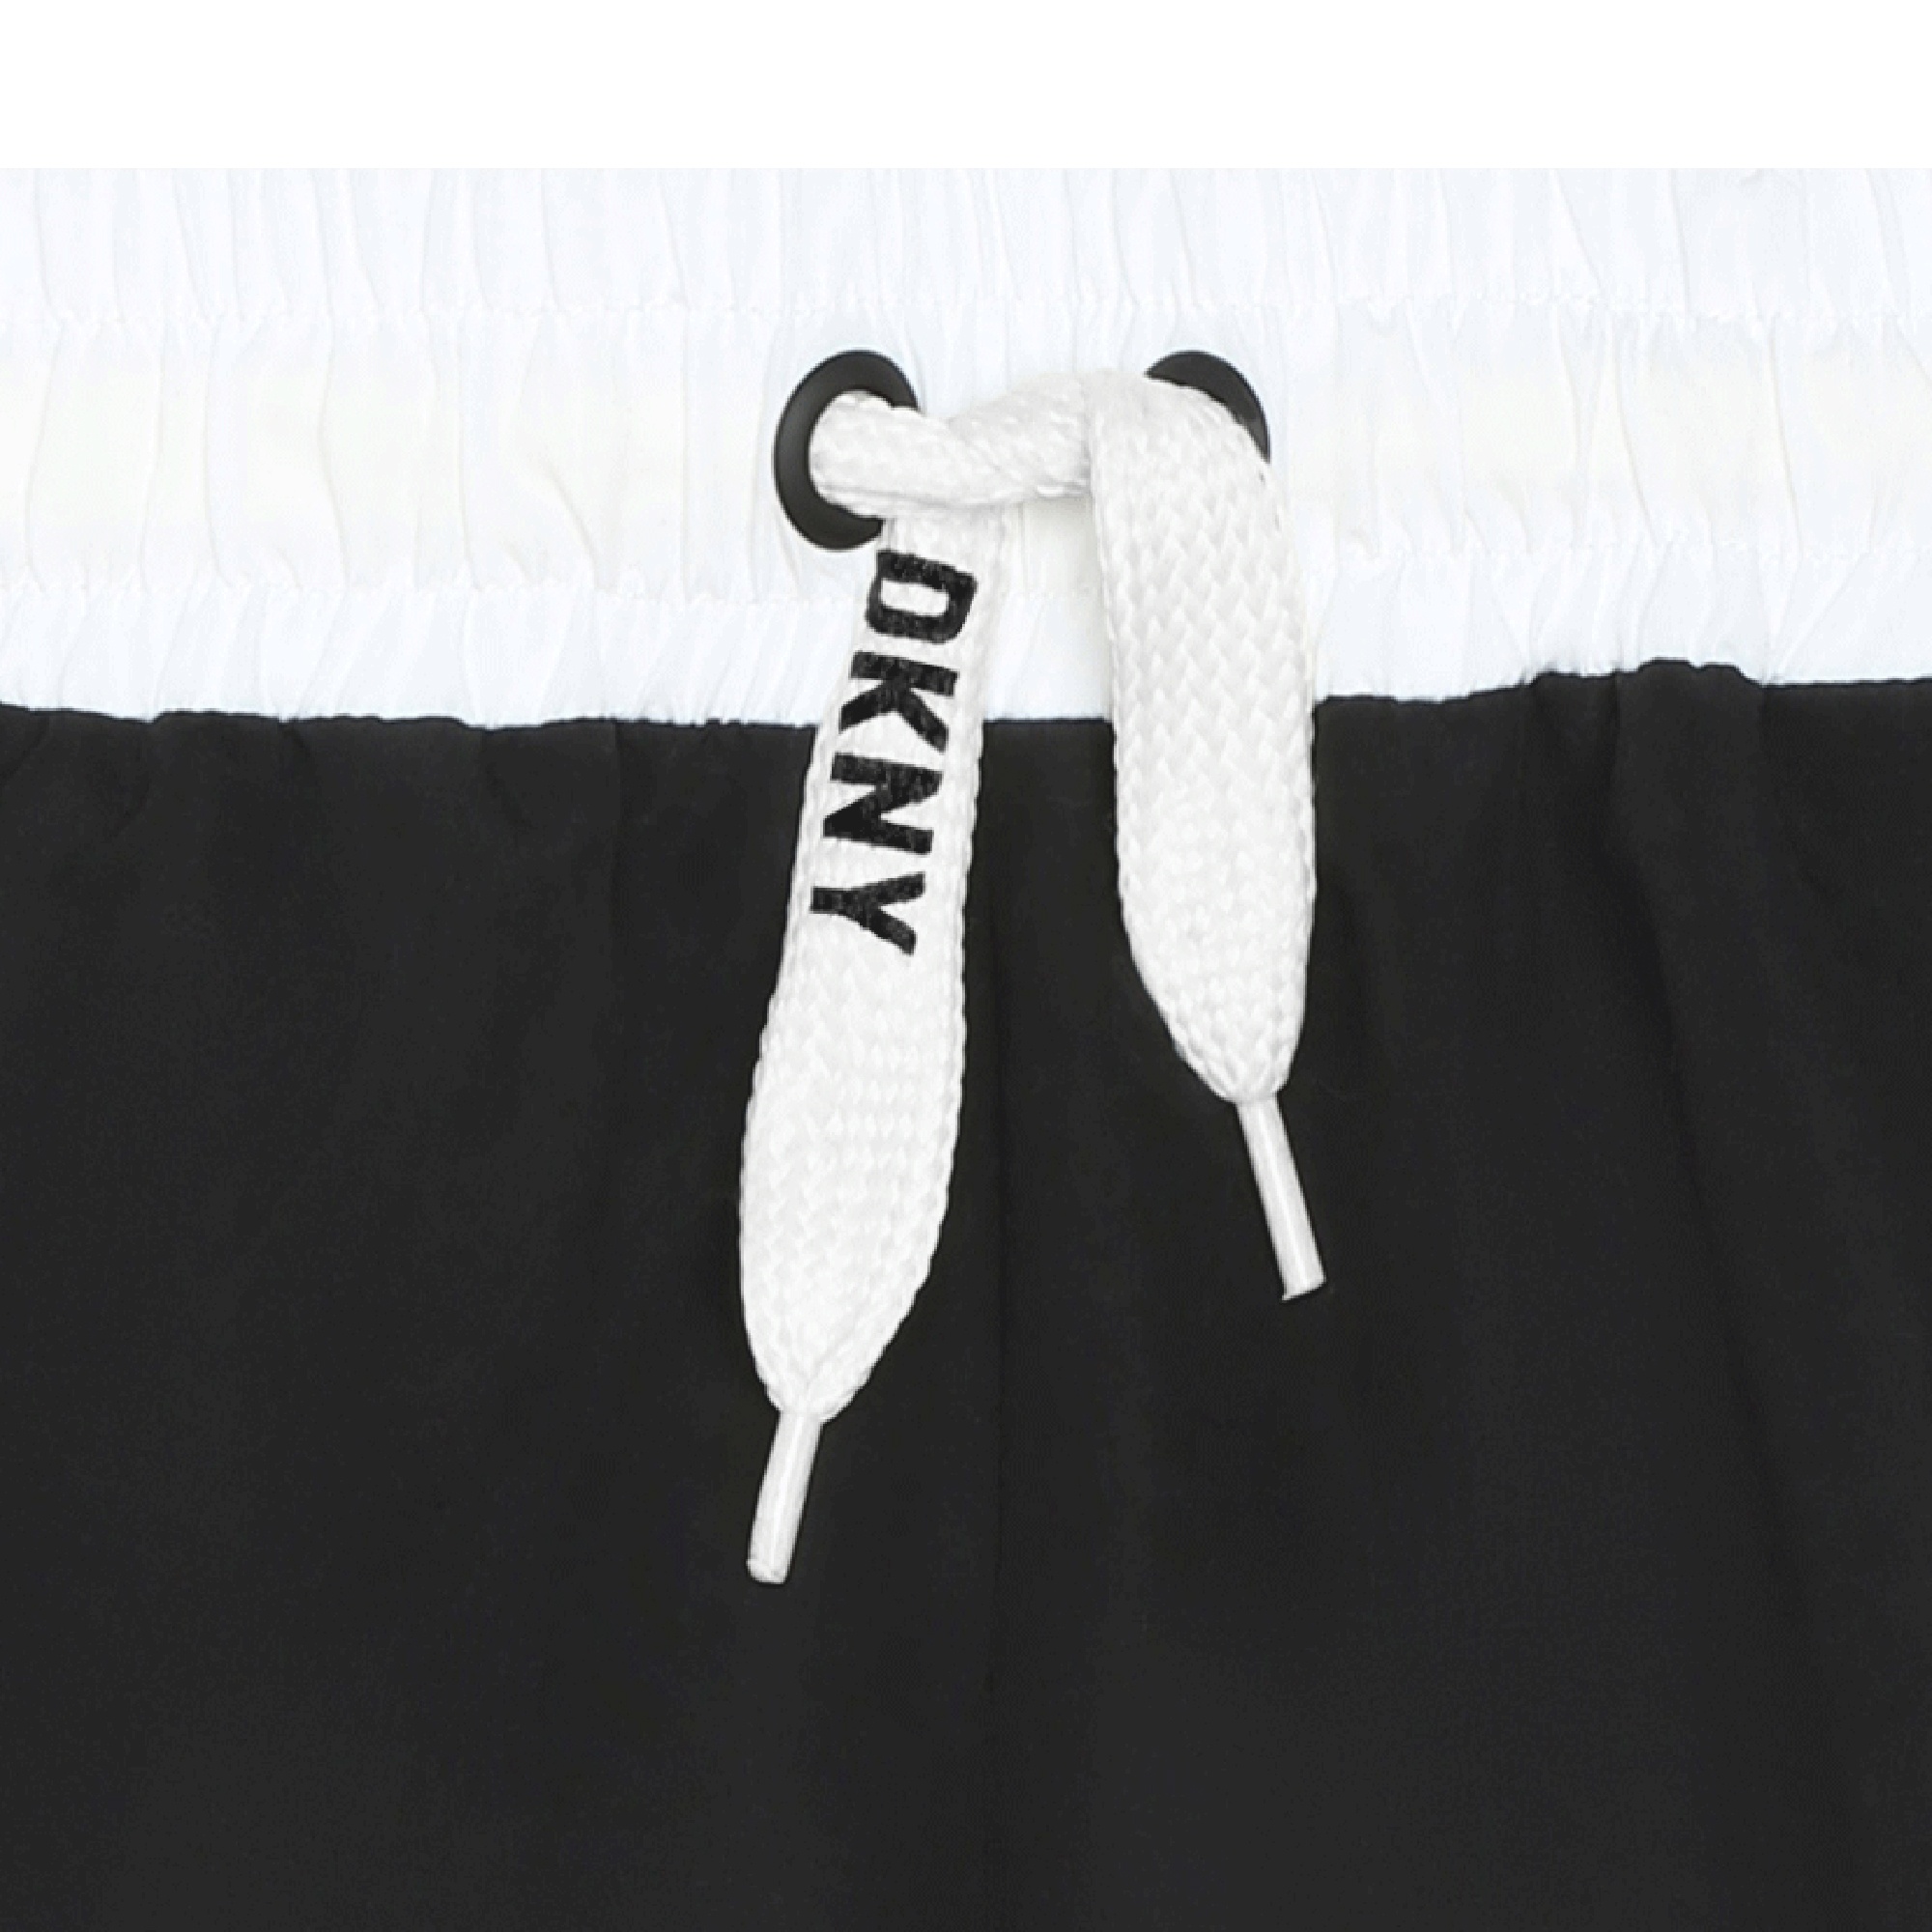 Swim shorts with drawstring DKNY for BOY